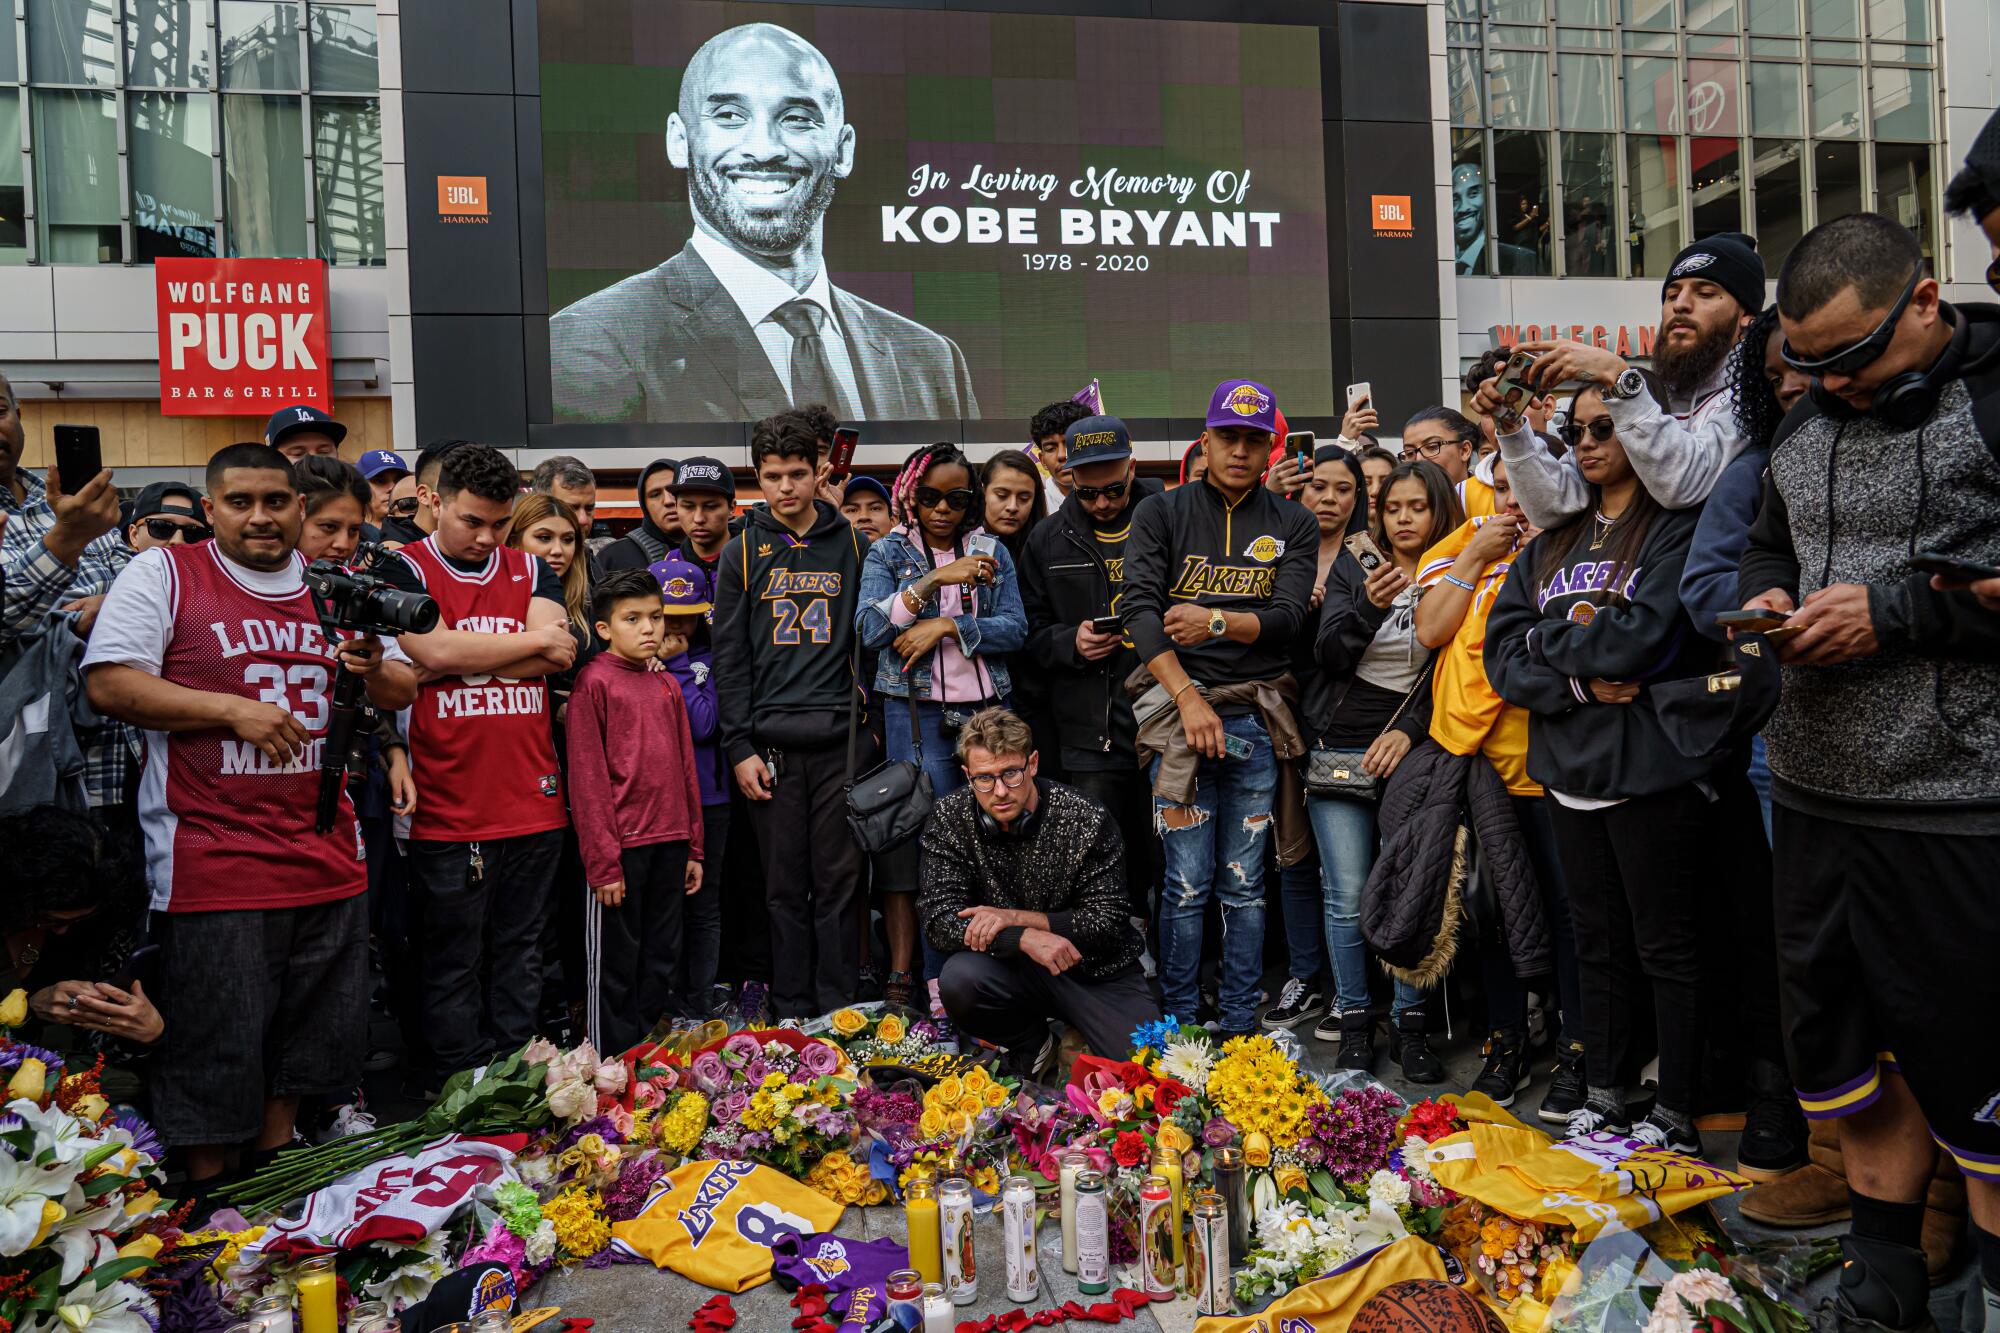 The Dodgers will honor Kobe Bryant's memory on Sept. 1